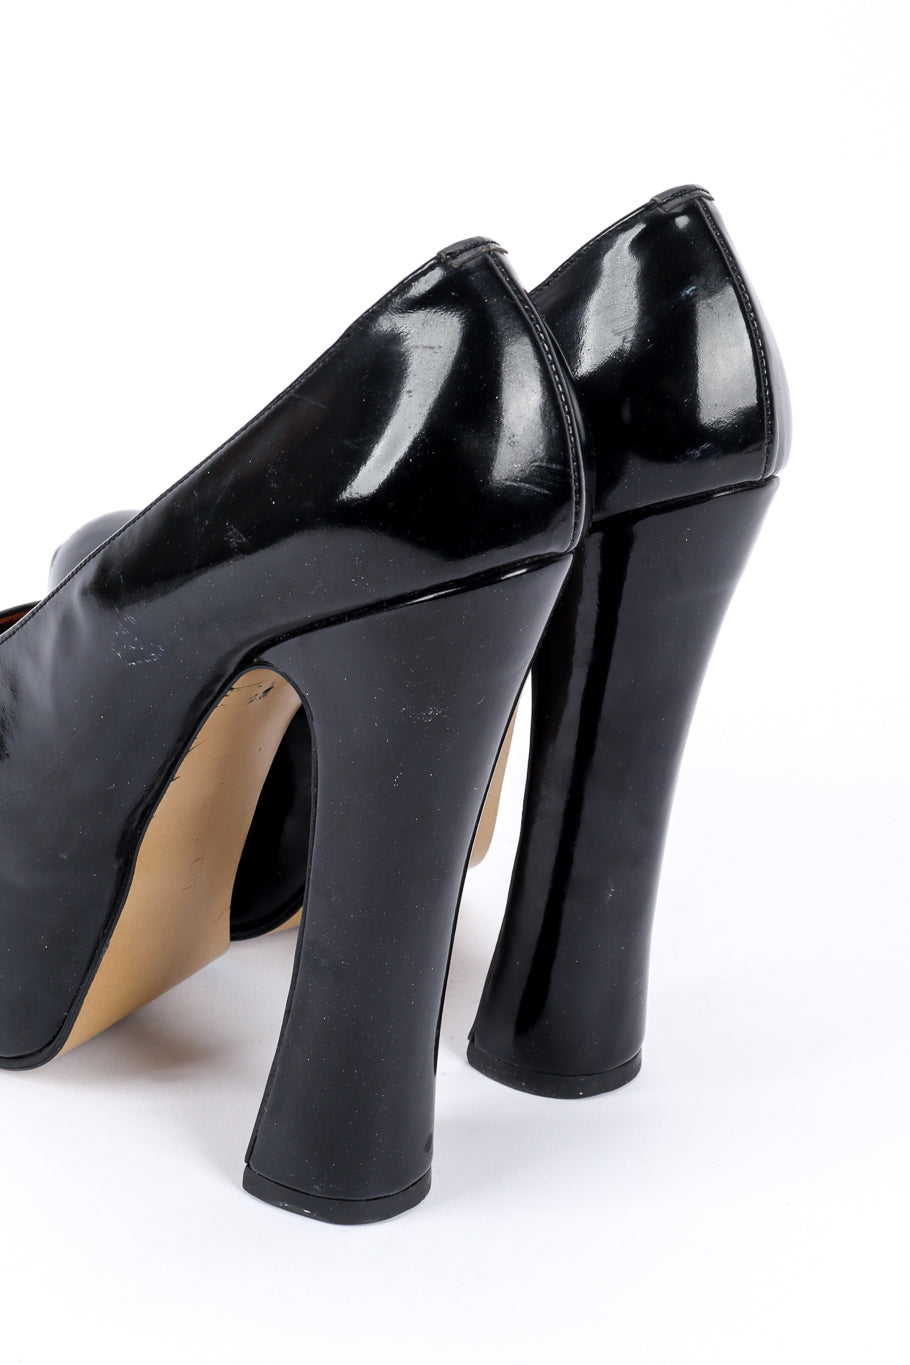 Vintage Vivienne Westwood 1993 F/W Patent Leather Elevated Court Shoe back heel @recessla